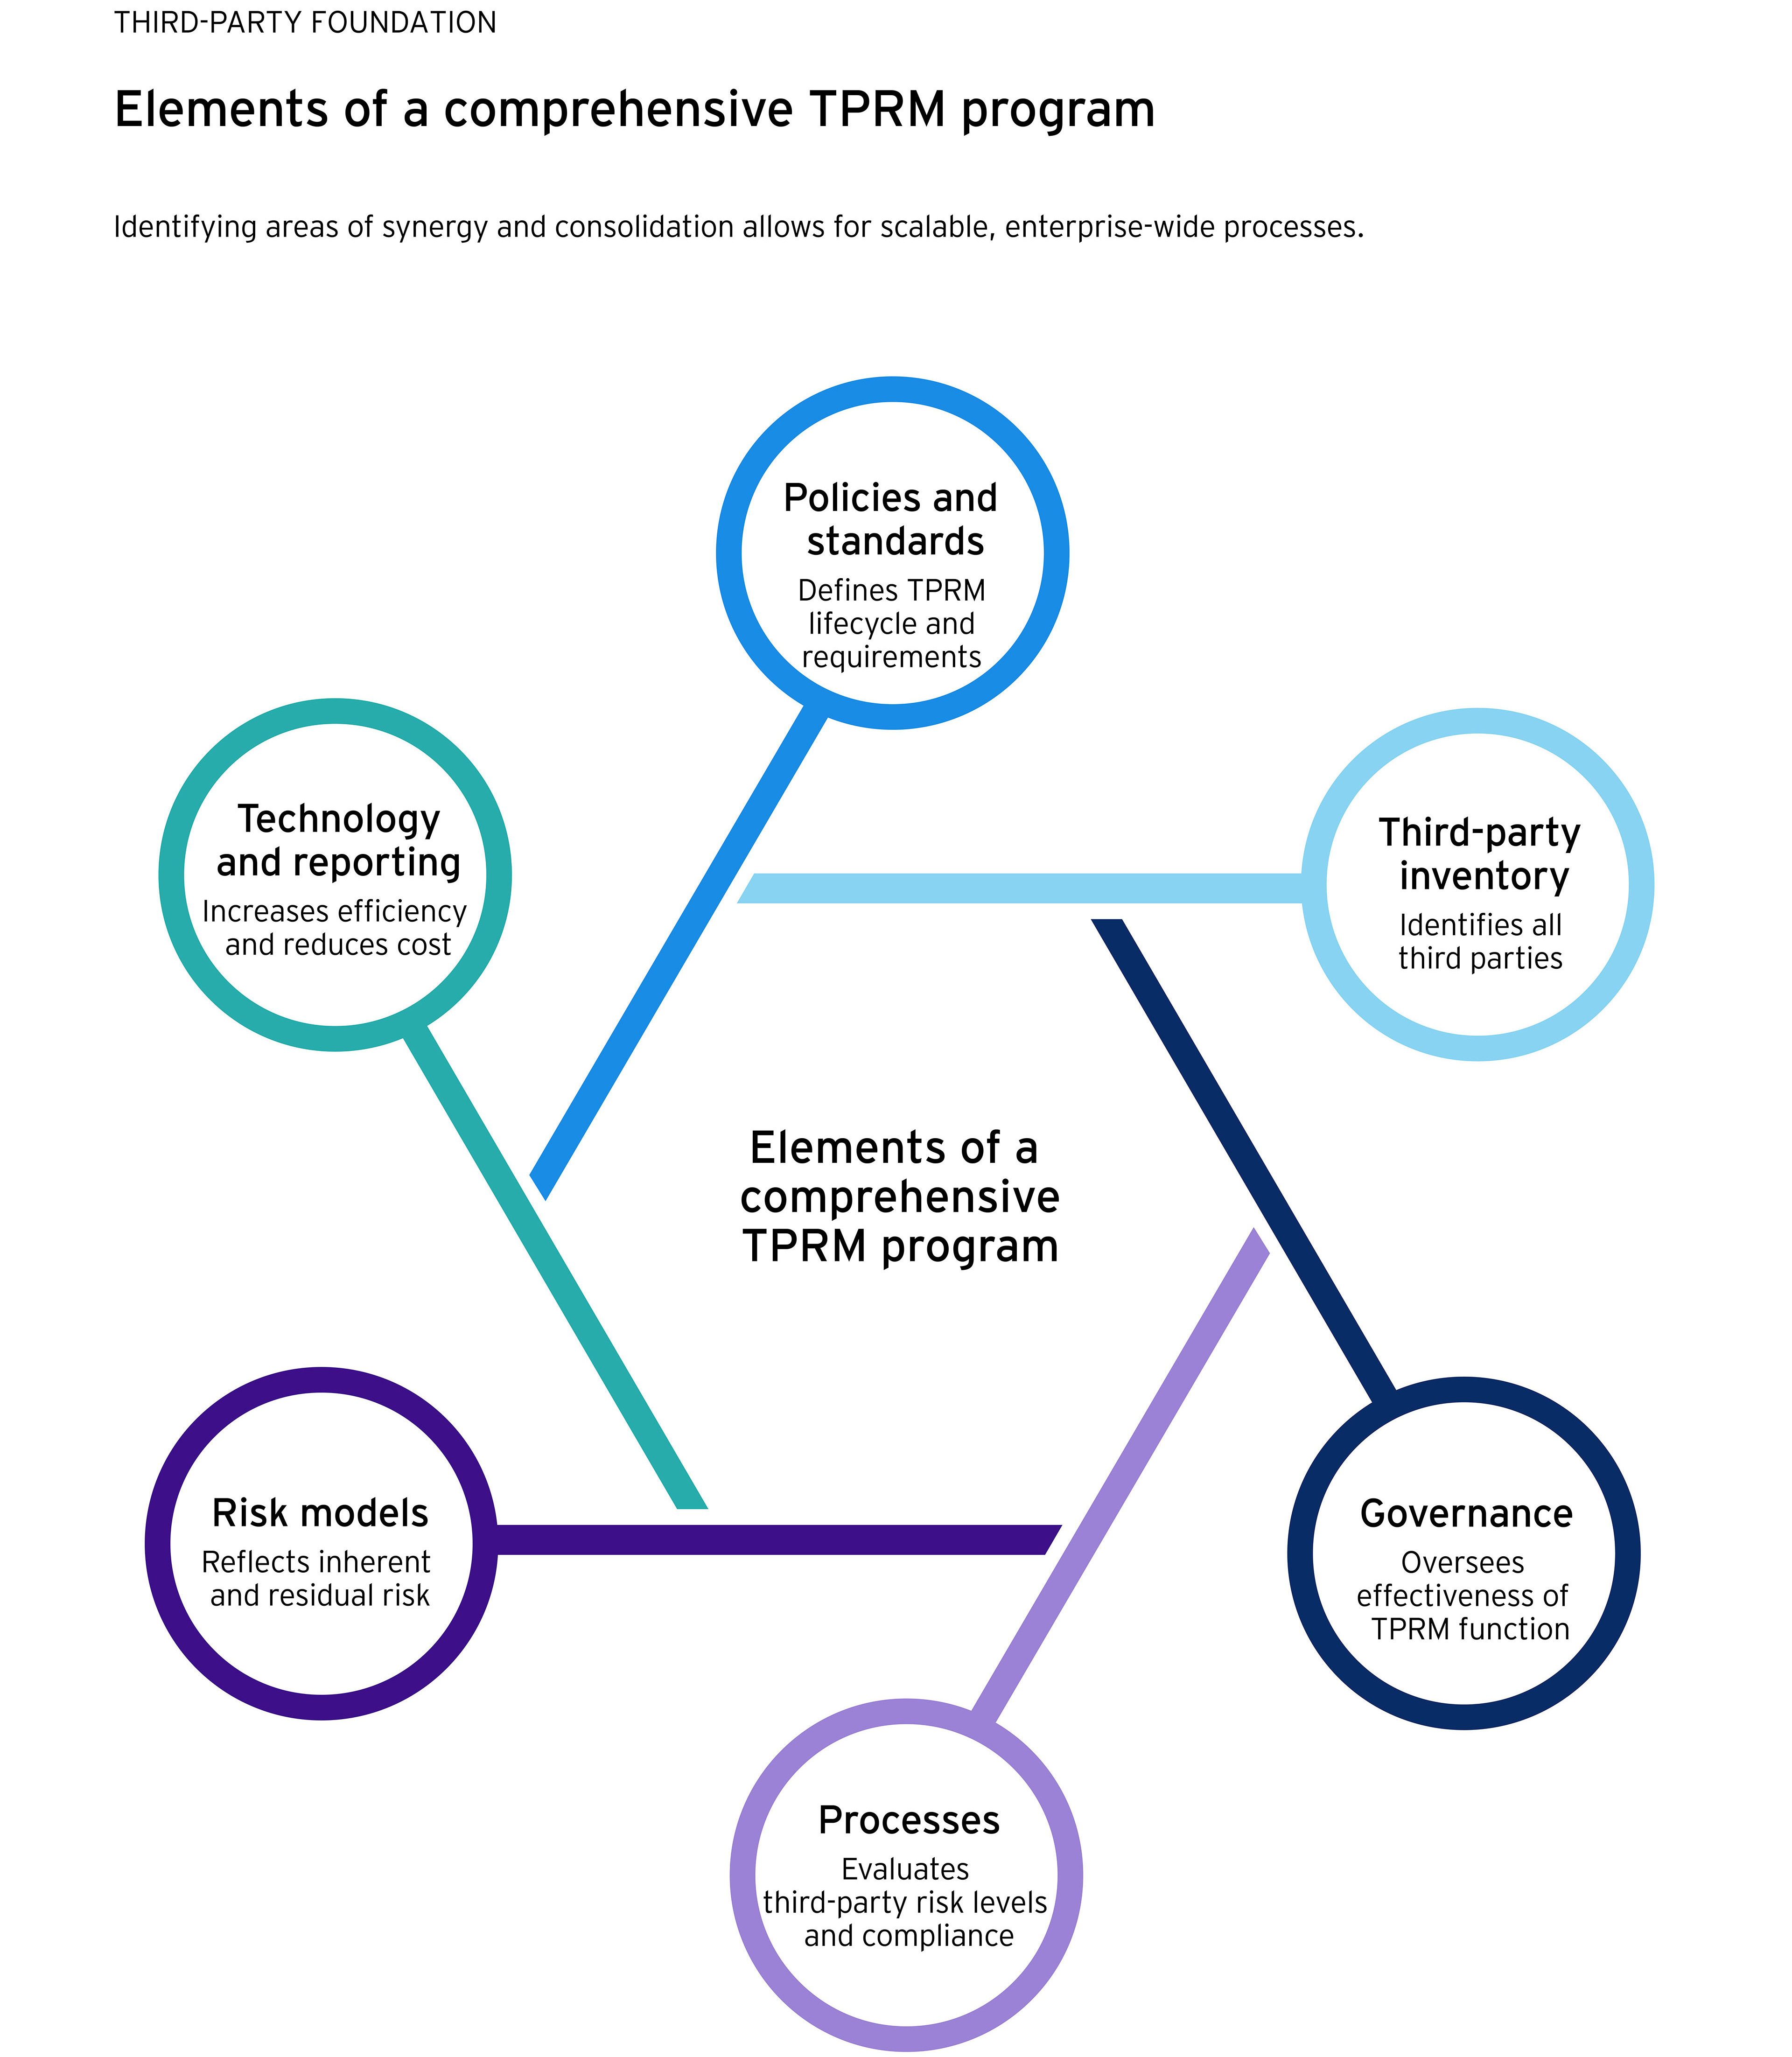 EY - Elements of a comprehensive TPRM program